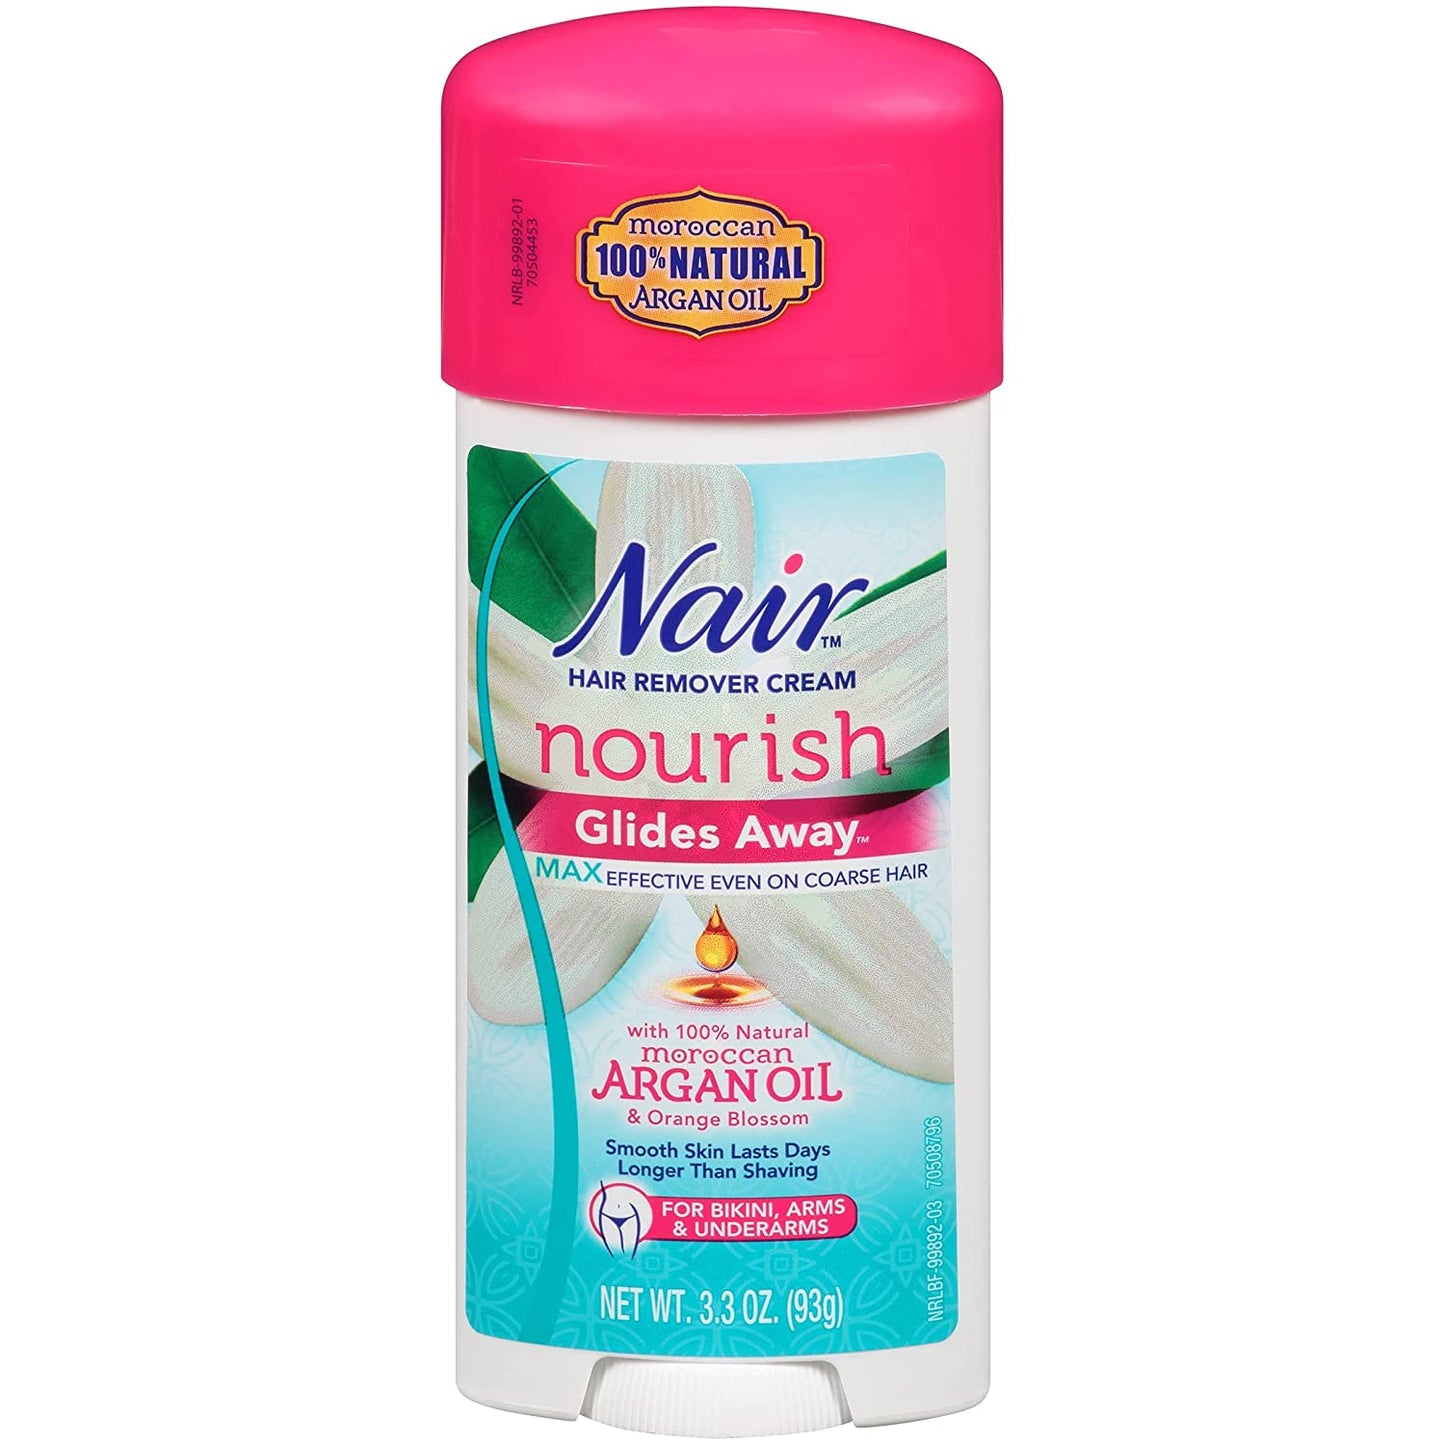 Nair Hair Remover Cream Nourish Glides Away Max Effective Even On Coarse Hair - 93g